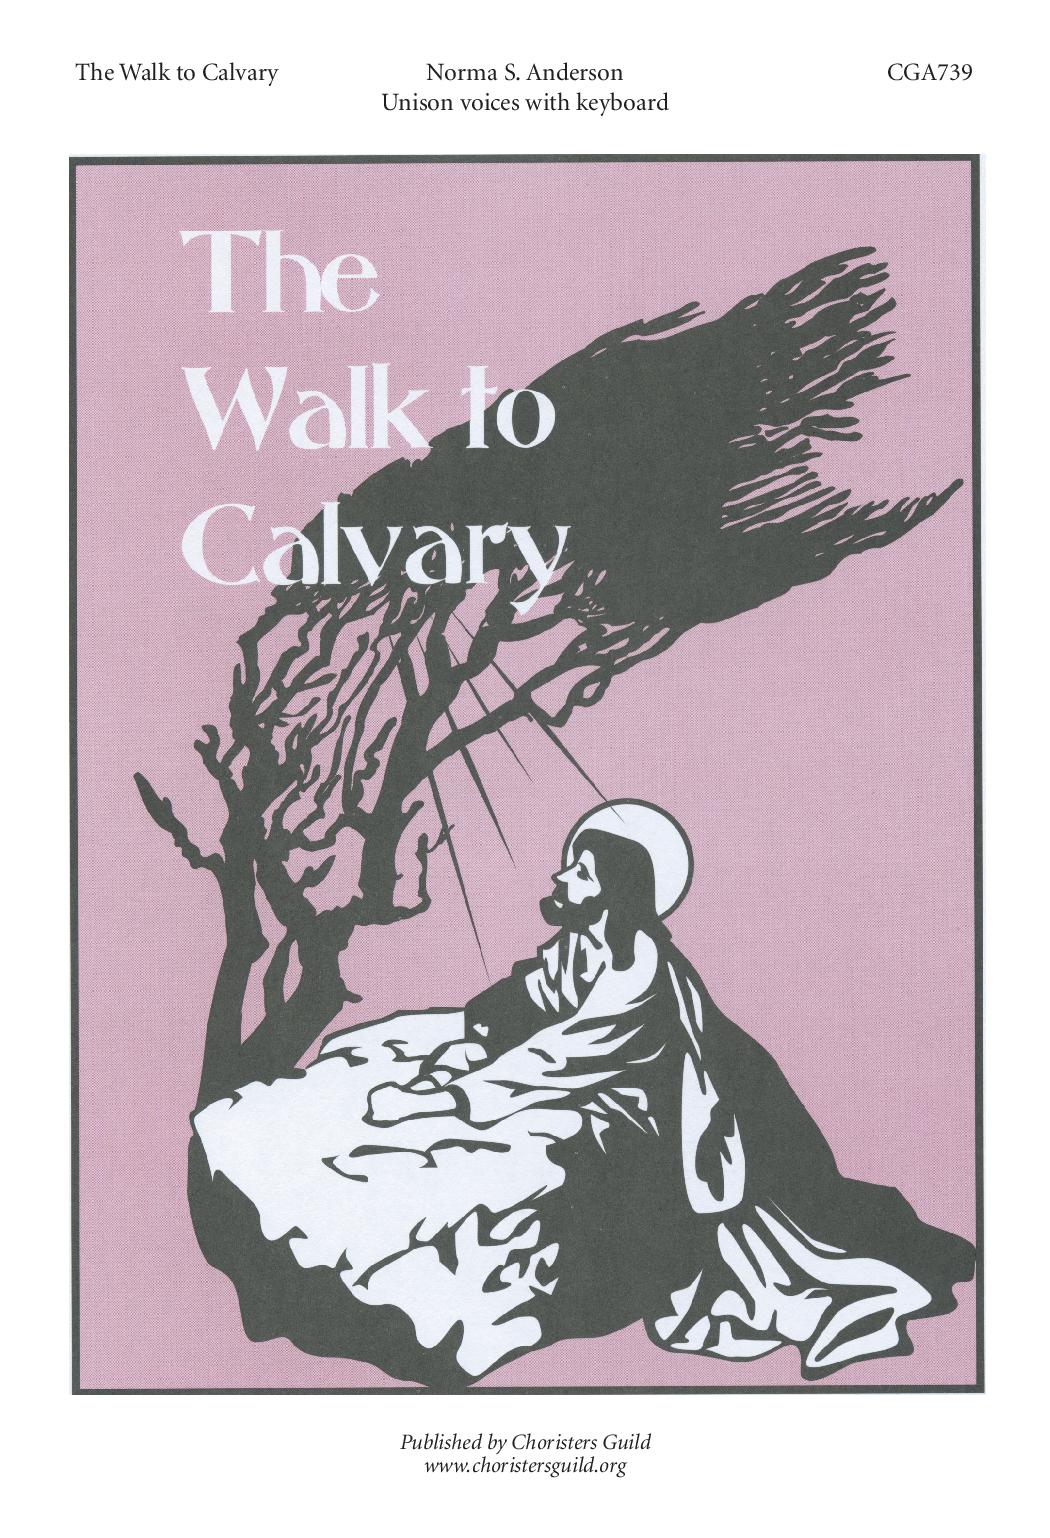 The Walk to Calvary